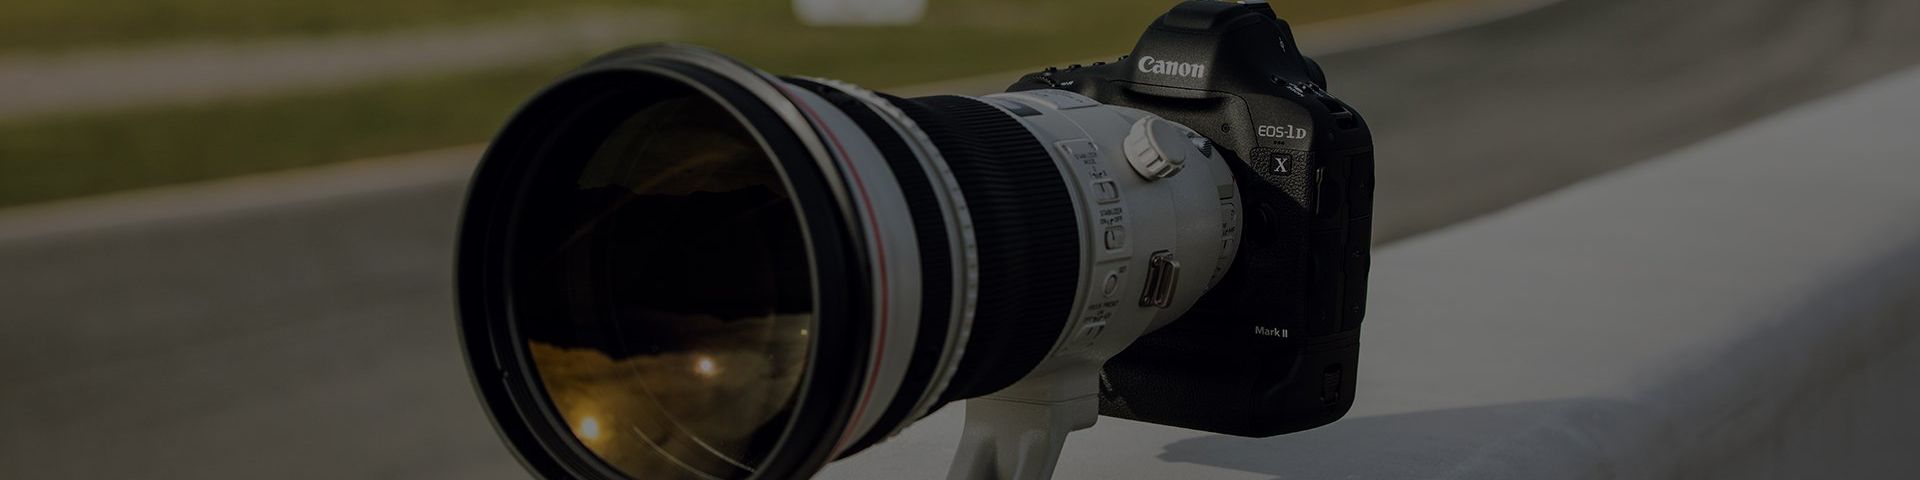 Camera Lens & Focus Calibration - Canon UK